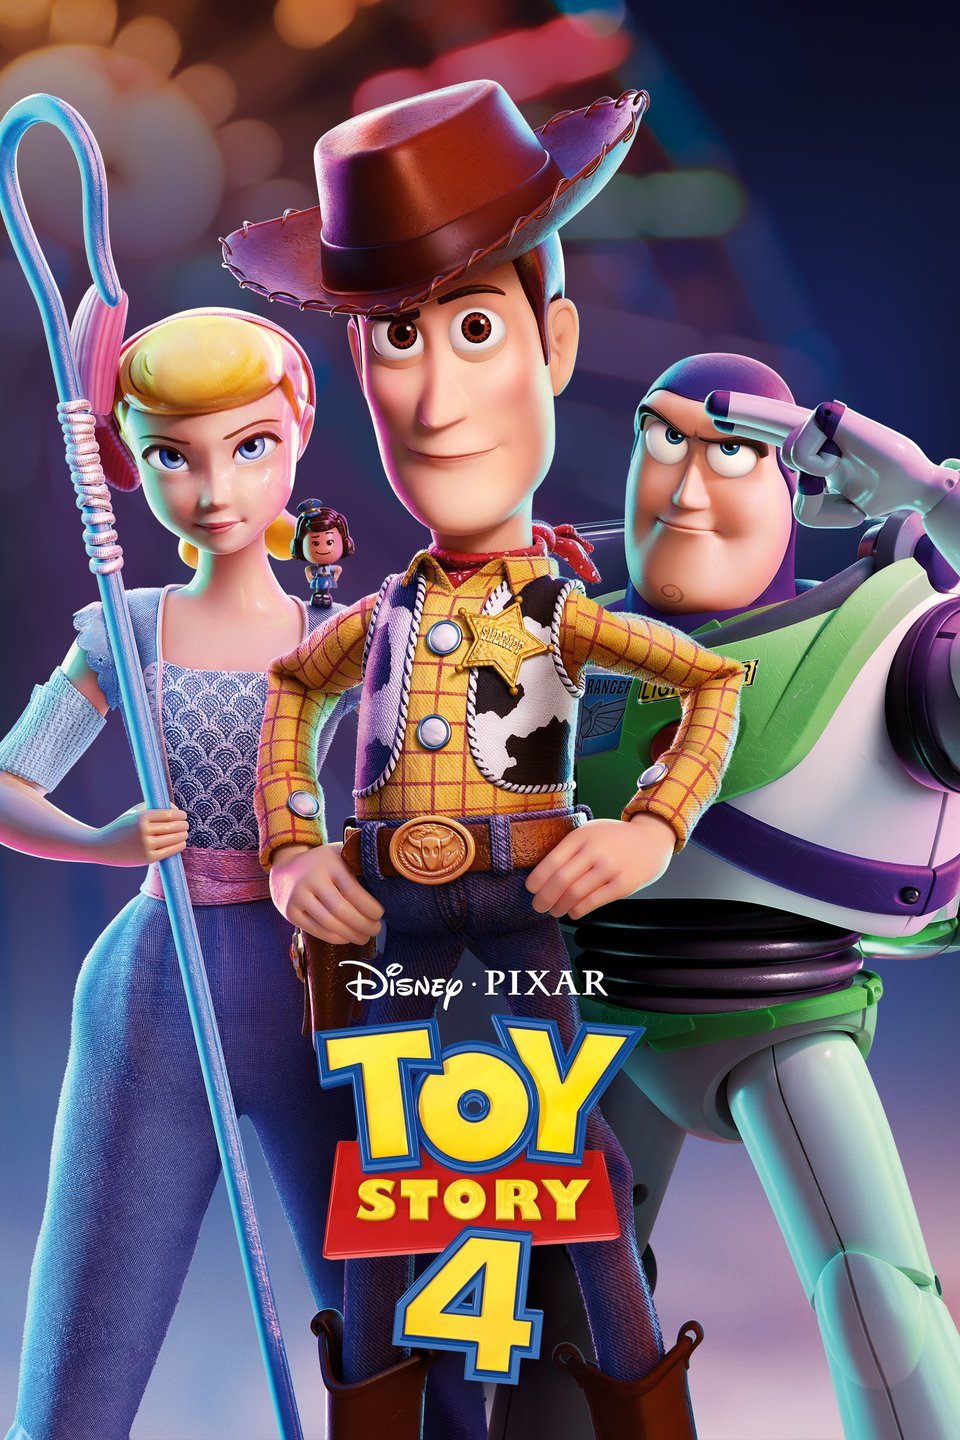 [MINI Super-HQ] Toy Story 4 (2019) ทอย สตอรี่ ภาค 4 [พากย์ไทย 5.1 + เสียงอังกฤษ DTS] [บรรยายไทย + อังกฤษ] [เสียงไทย + ซับไทย] [OPENLOAD]